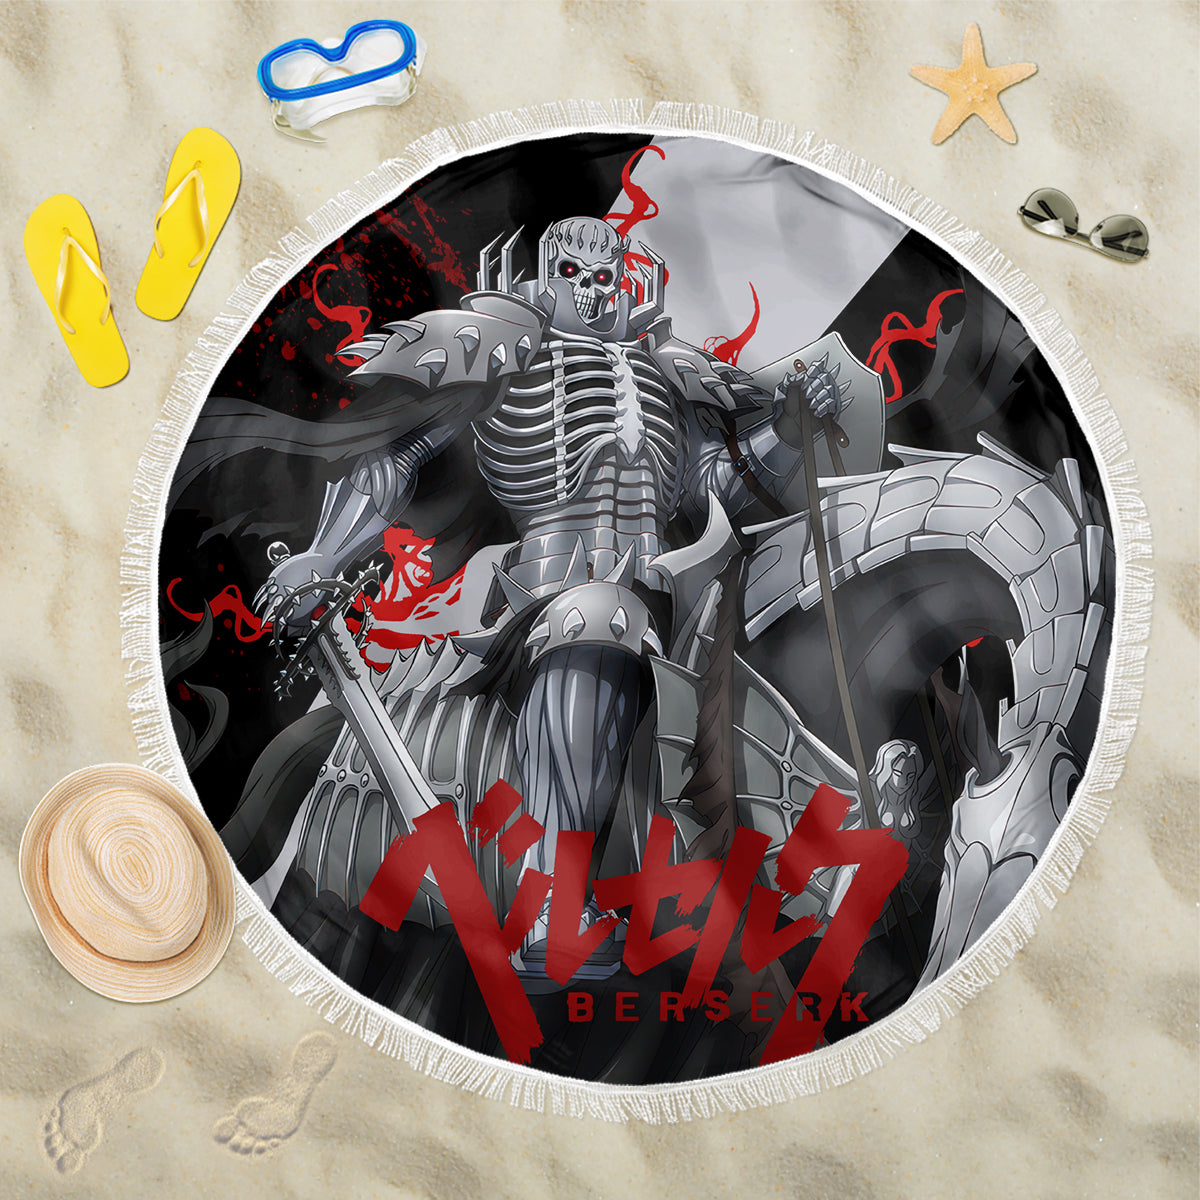 The Skull Knight Berserk Beach Blanket Black Blood Style